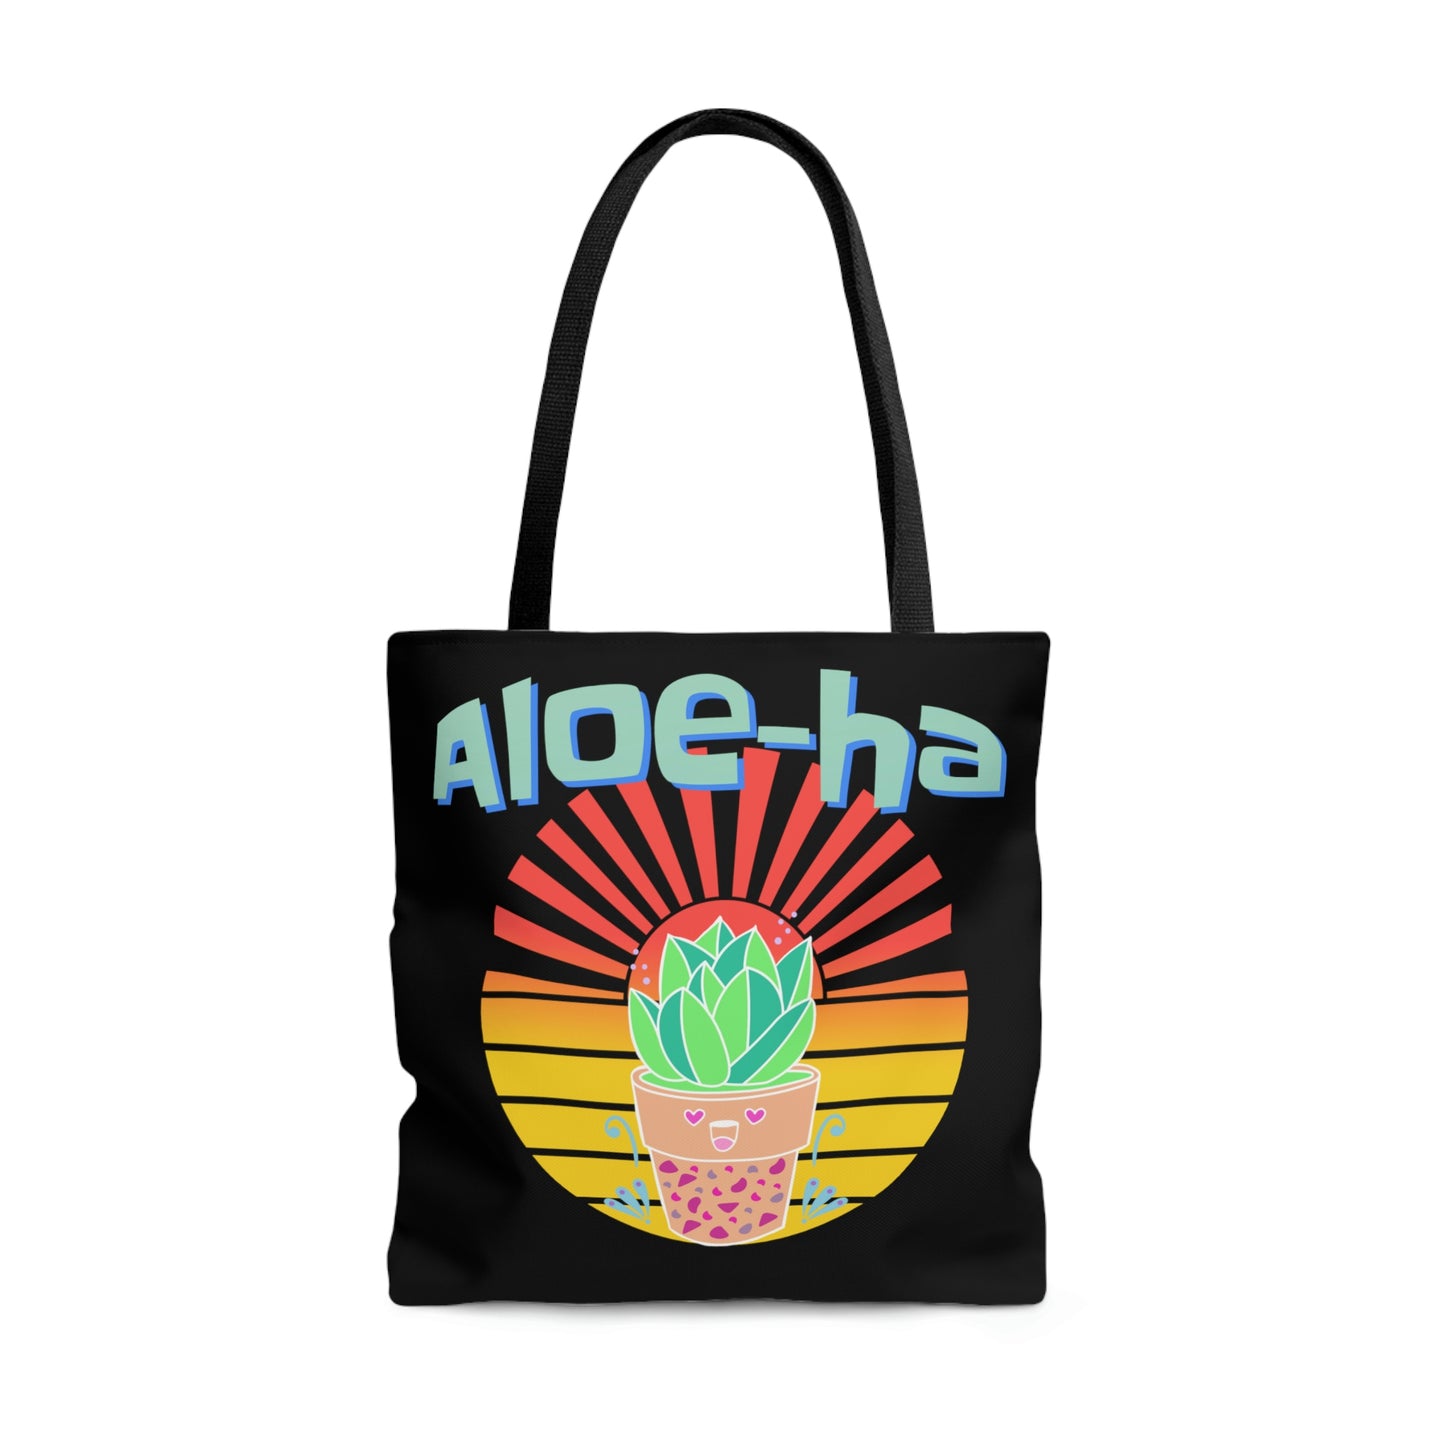 Tote Bag: Aloe-ha - Black